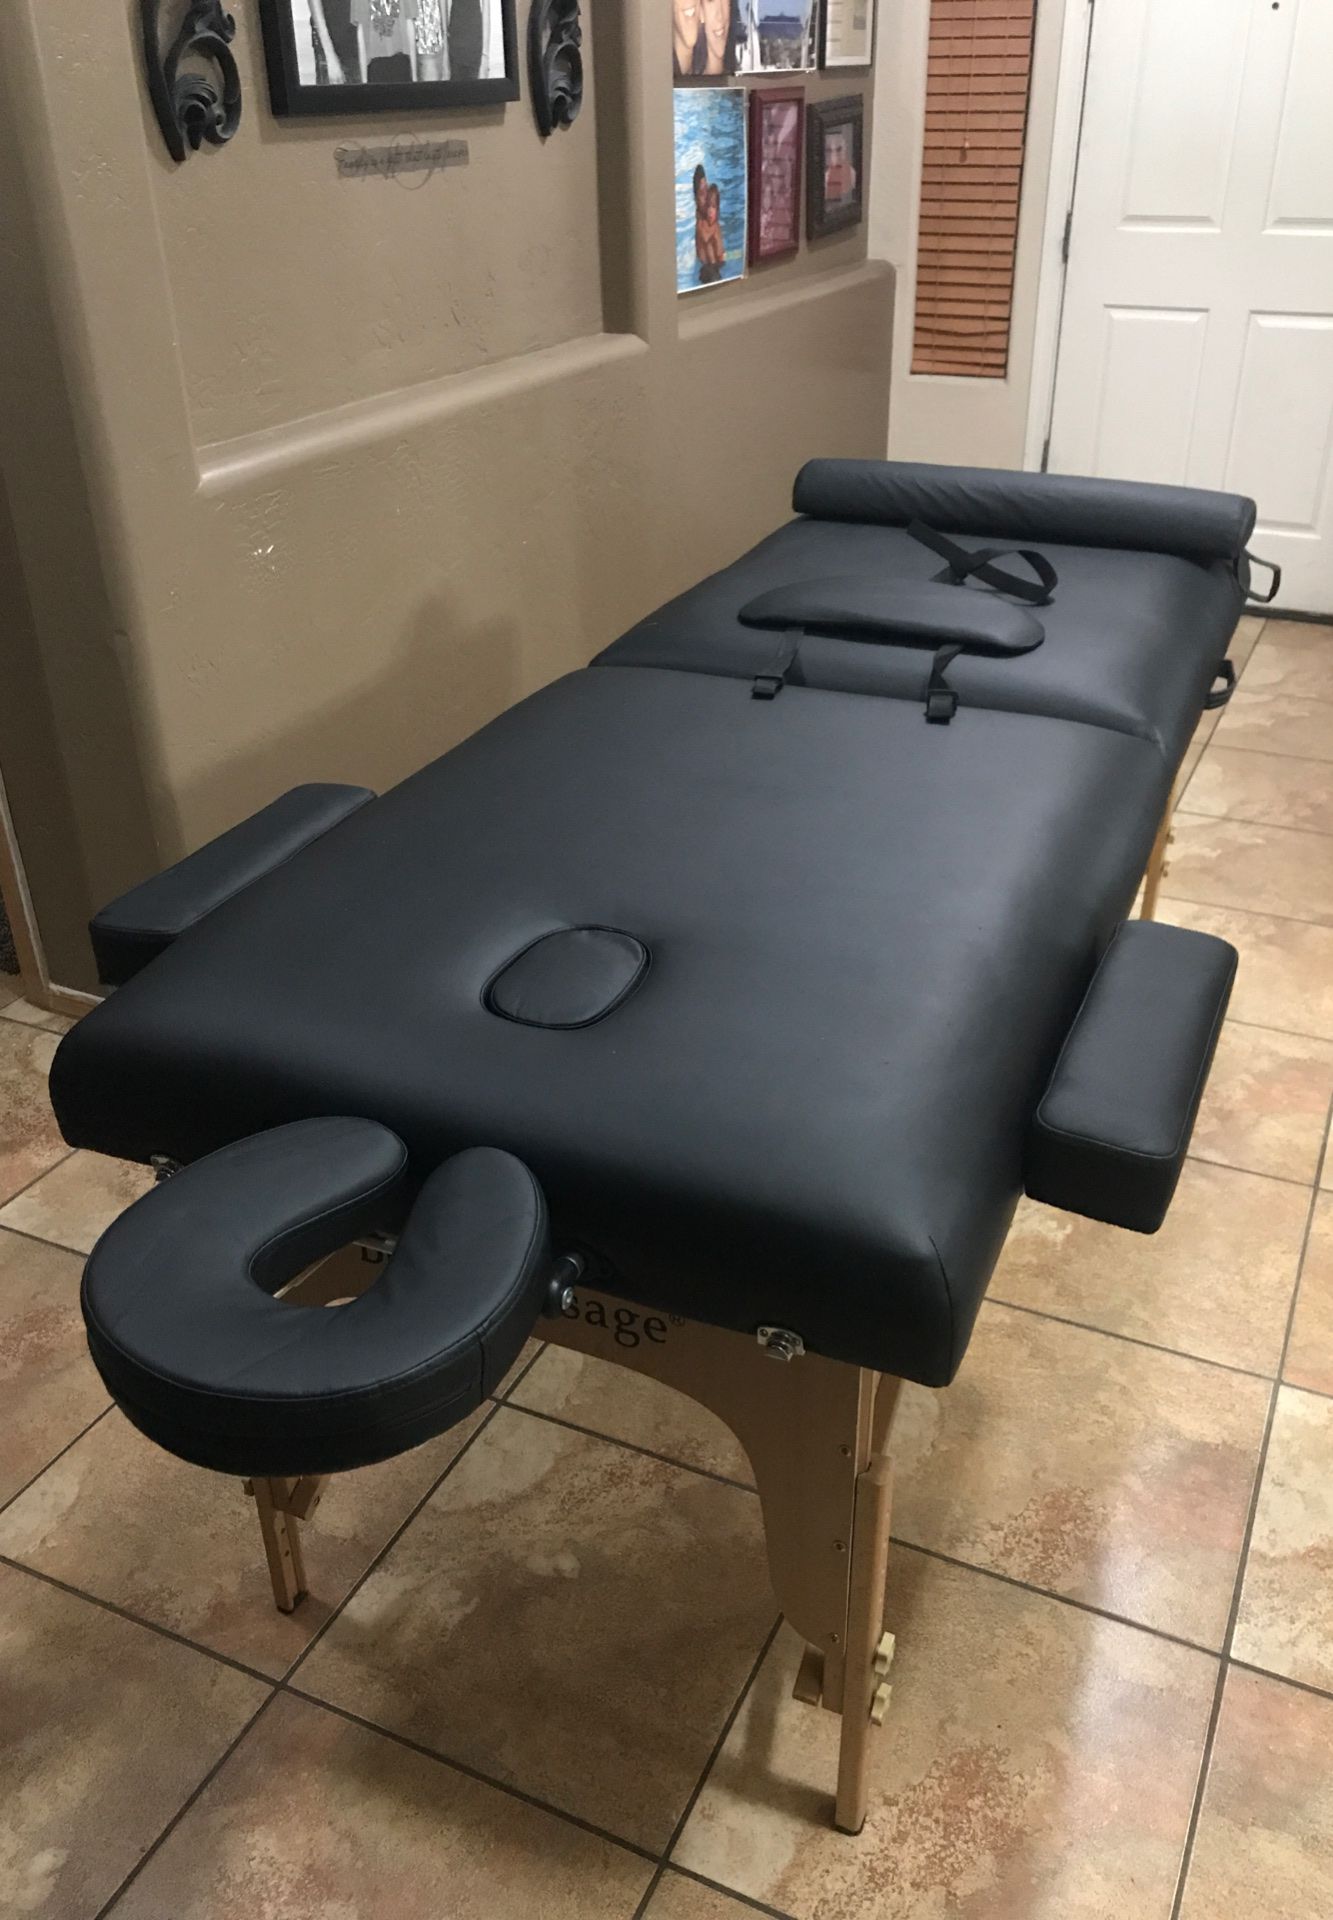 BestMassage Professional Student Starter Portable Massage Table